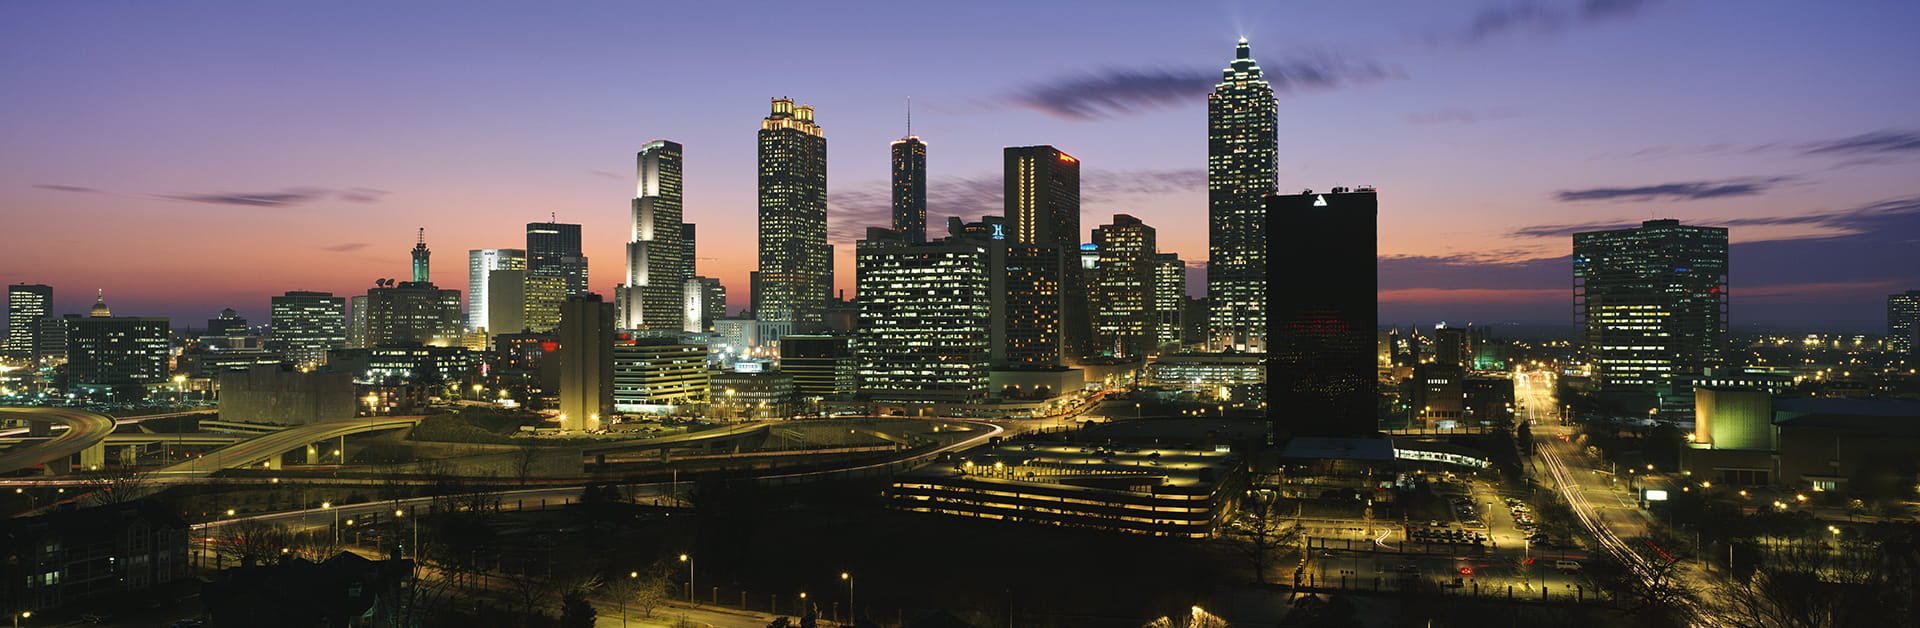 Atlanta cityscape at sunset